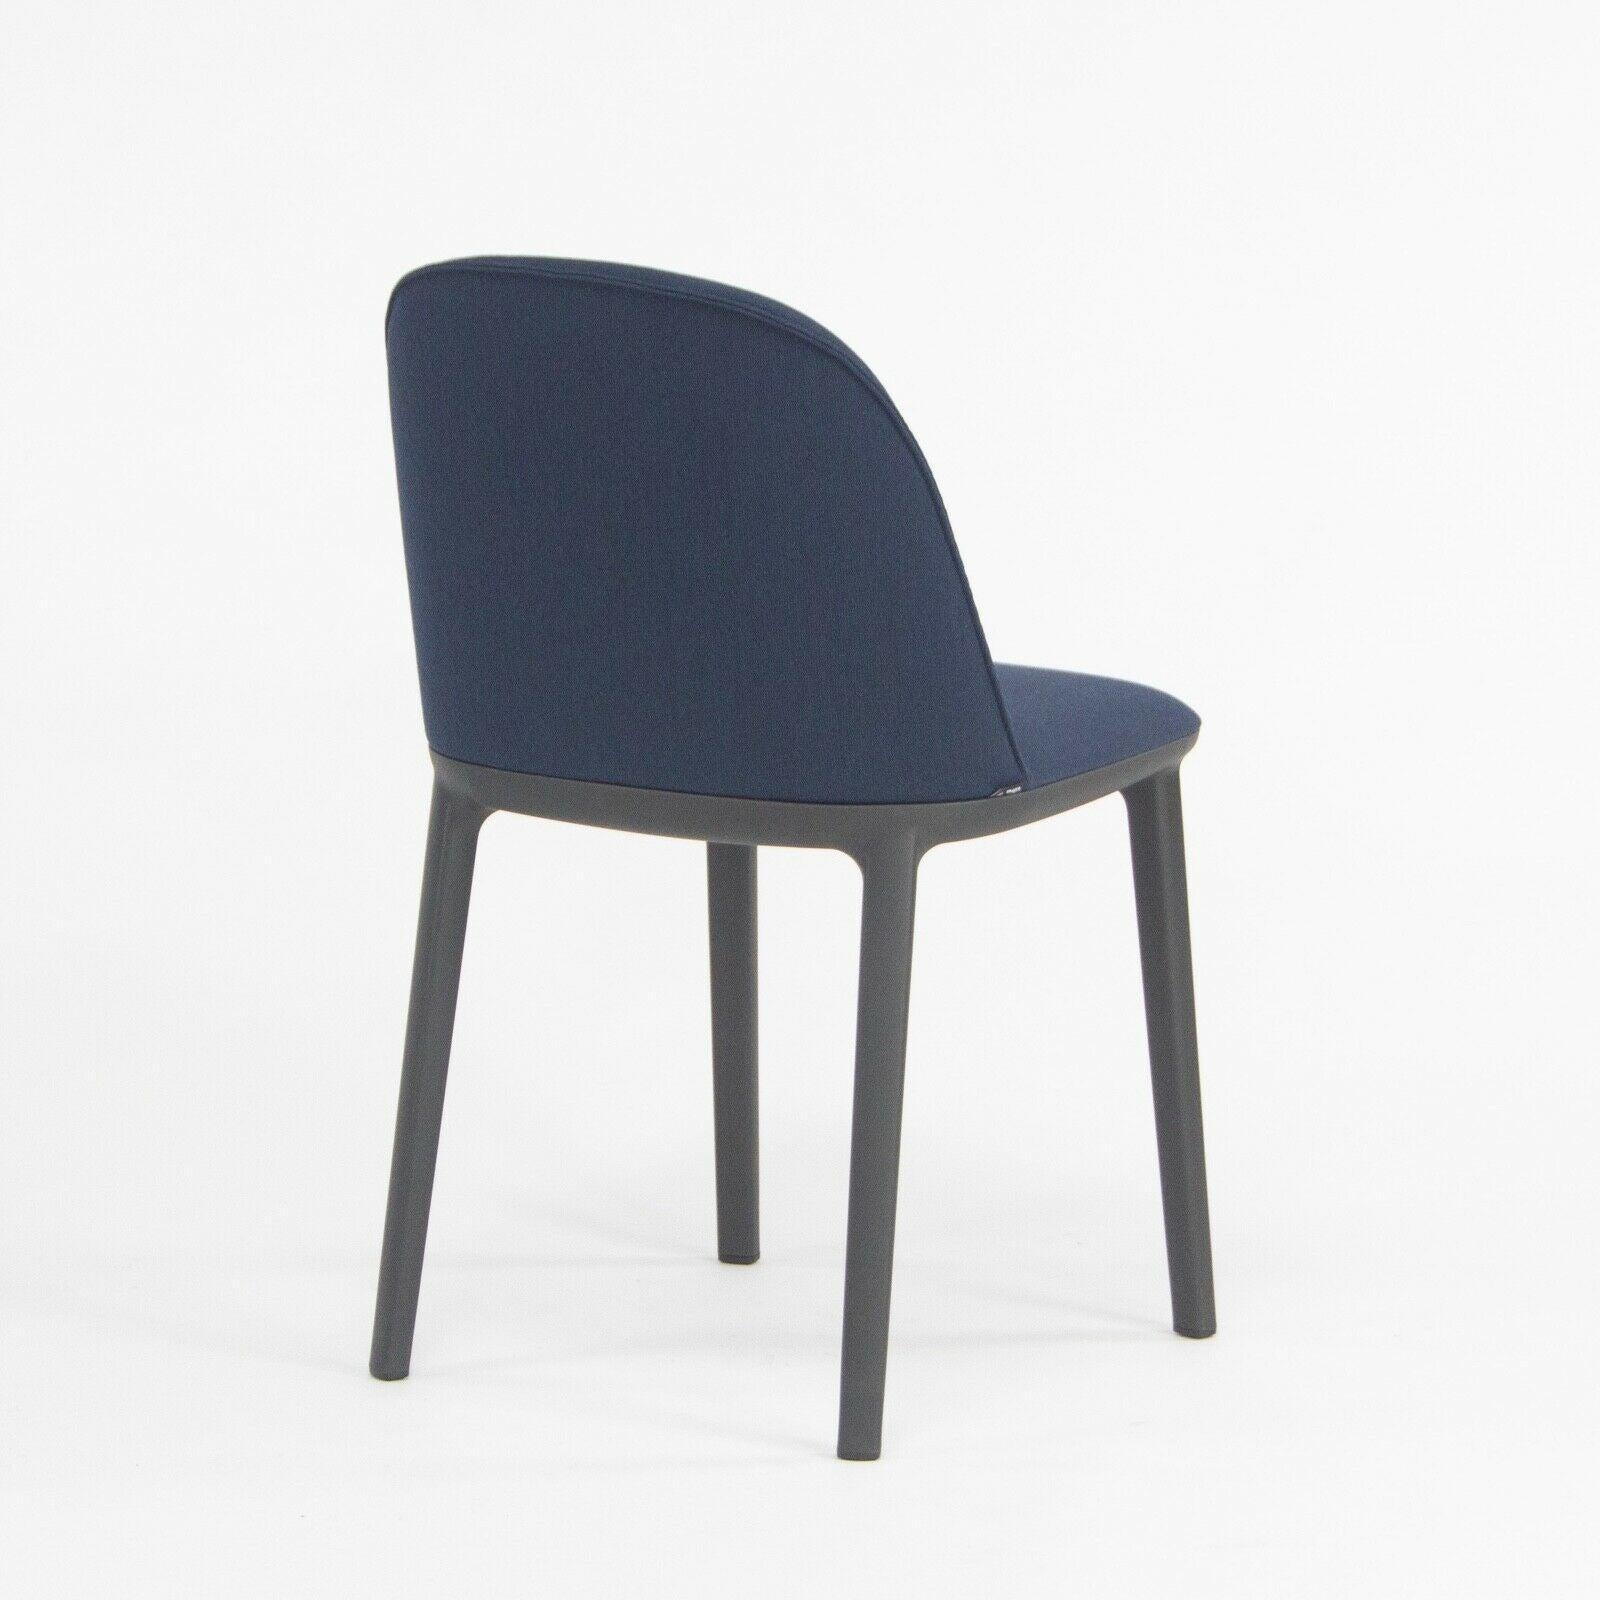 Swiss 2018 Vitra Softshell Side Chair w/ Dark Blue Fabric by Ronan & Erwan Bouroullec For Sale